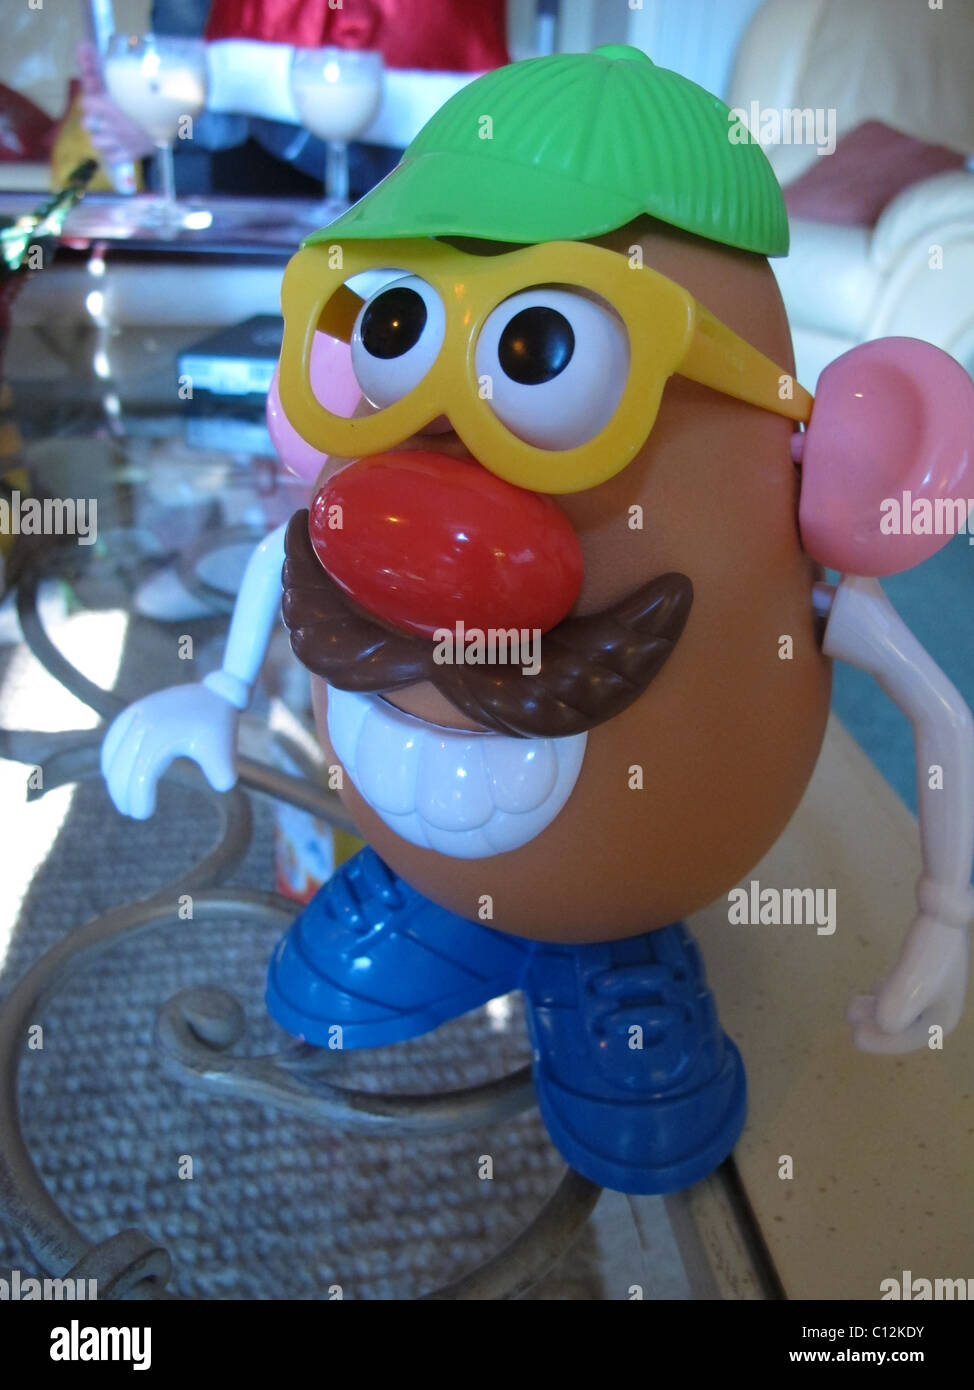 Mr Potato Head children's toy Stock Photo